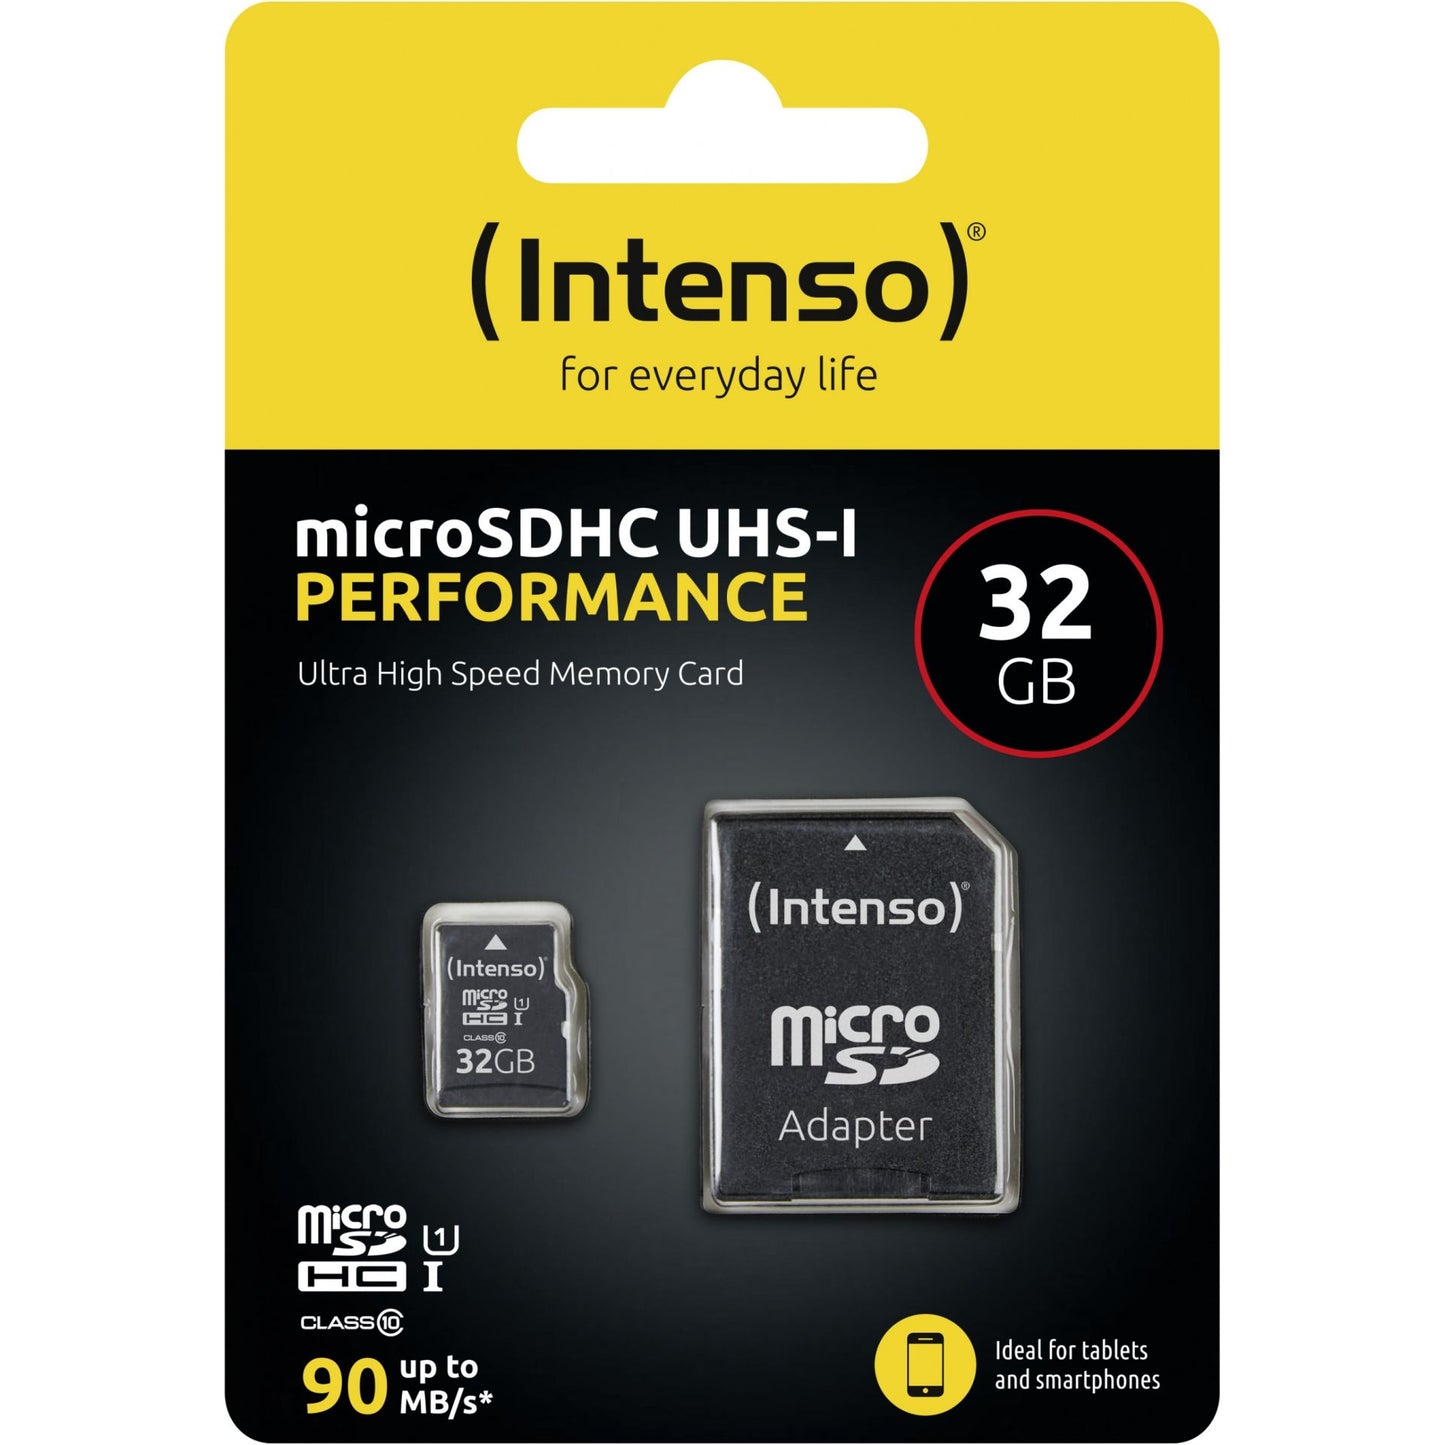 CARD 32GB Intenso 3424480 MicroSD - UHS-I